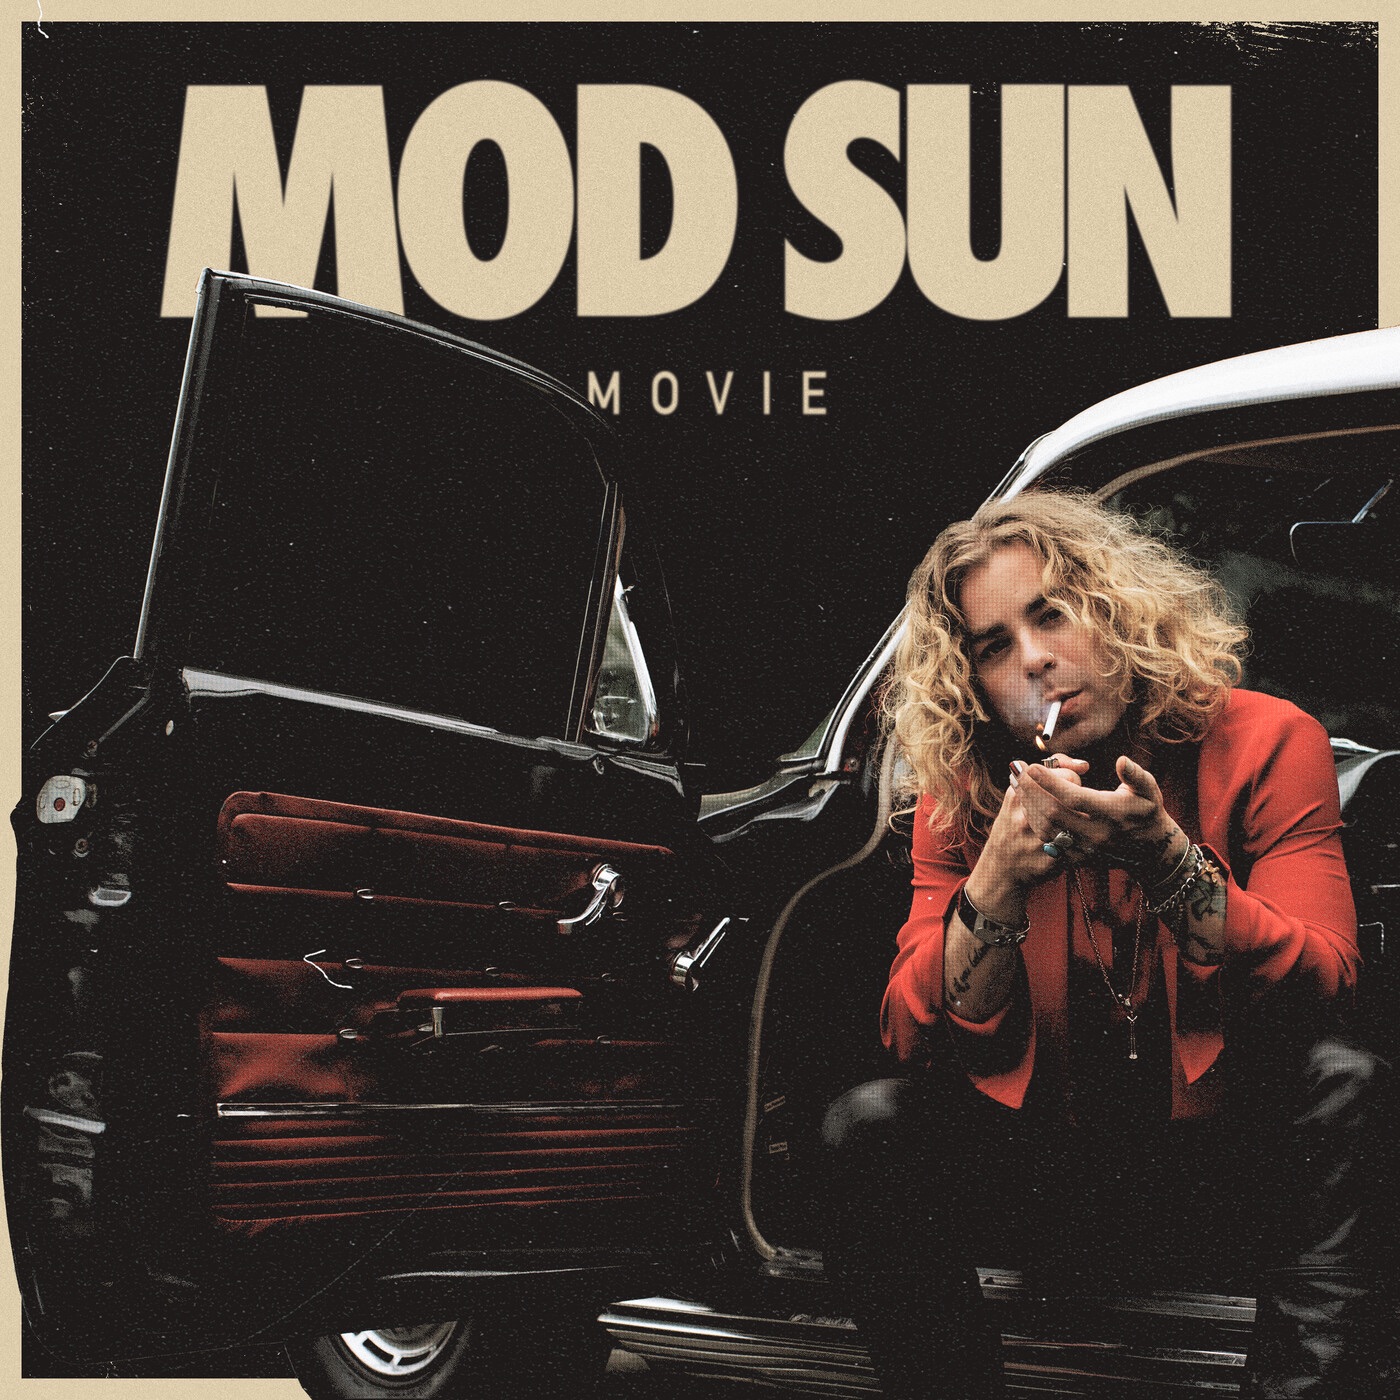 MOD SUN Movie cover artwork